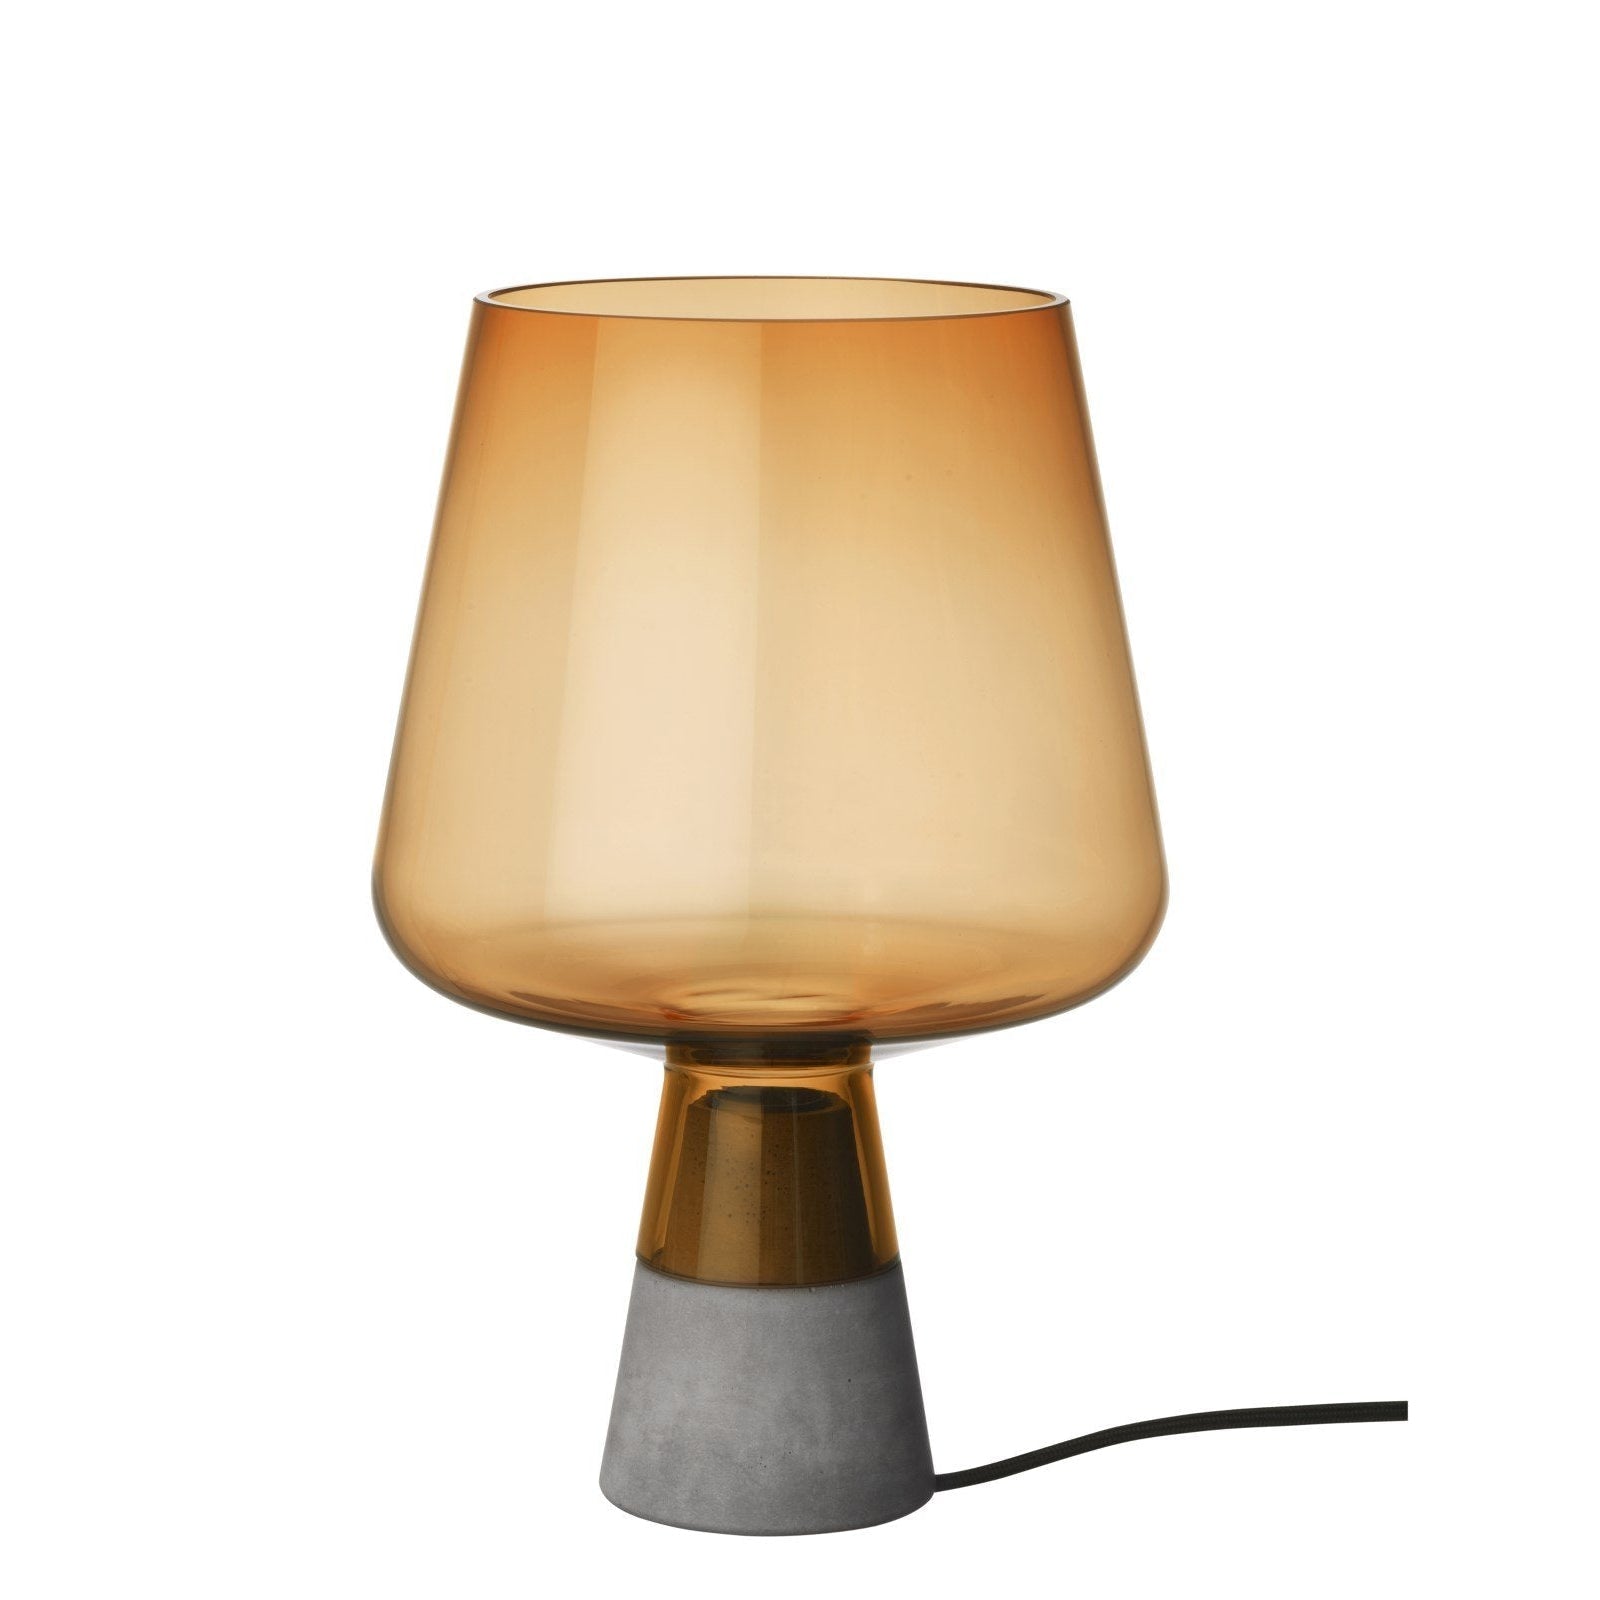 Iittala Leimu lampe cuivre, 30 cm